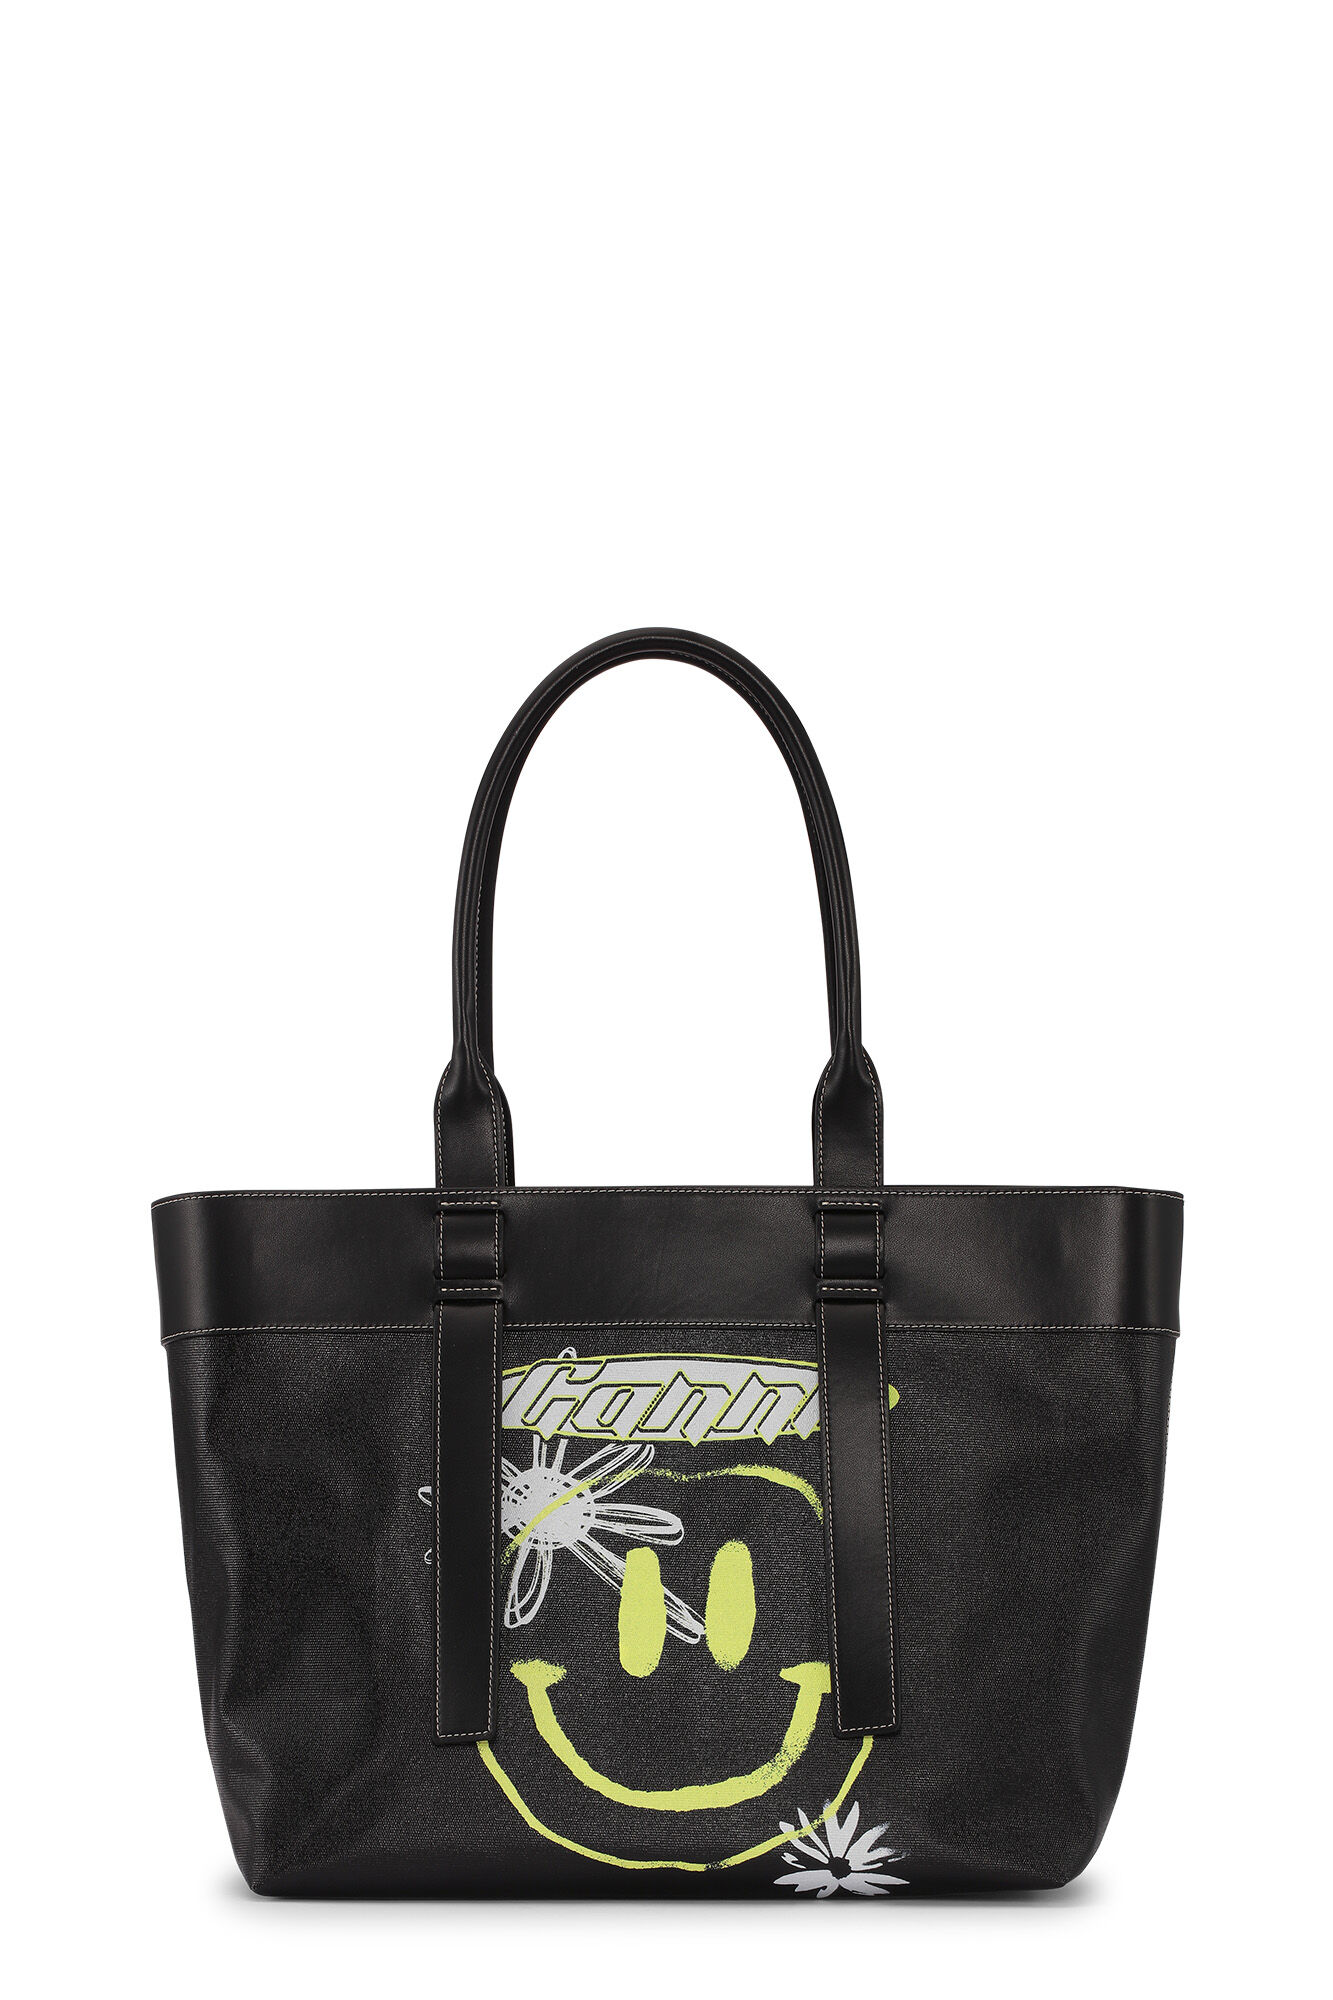 Women's Bags | Leather Handbags, Crossbodies & Tech Bags | GANNI US